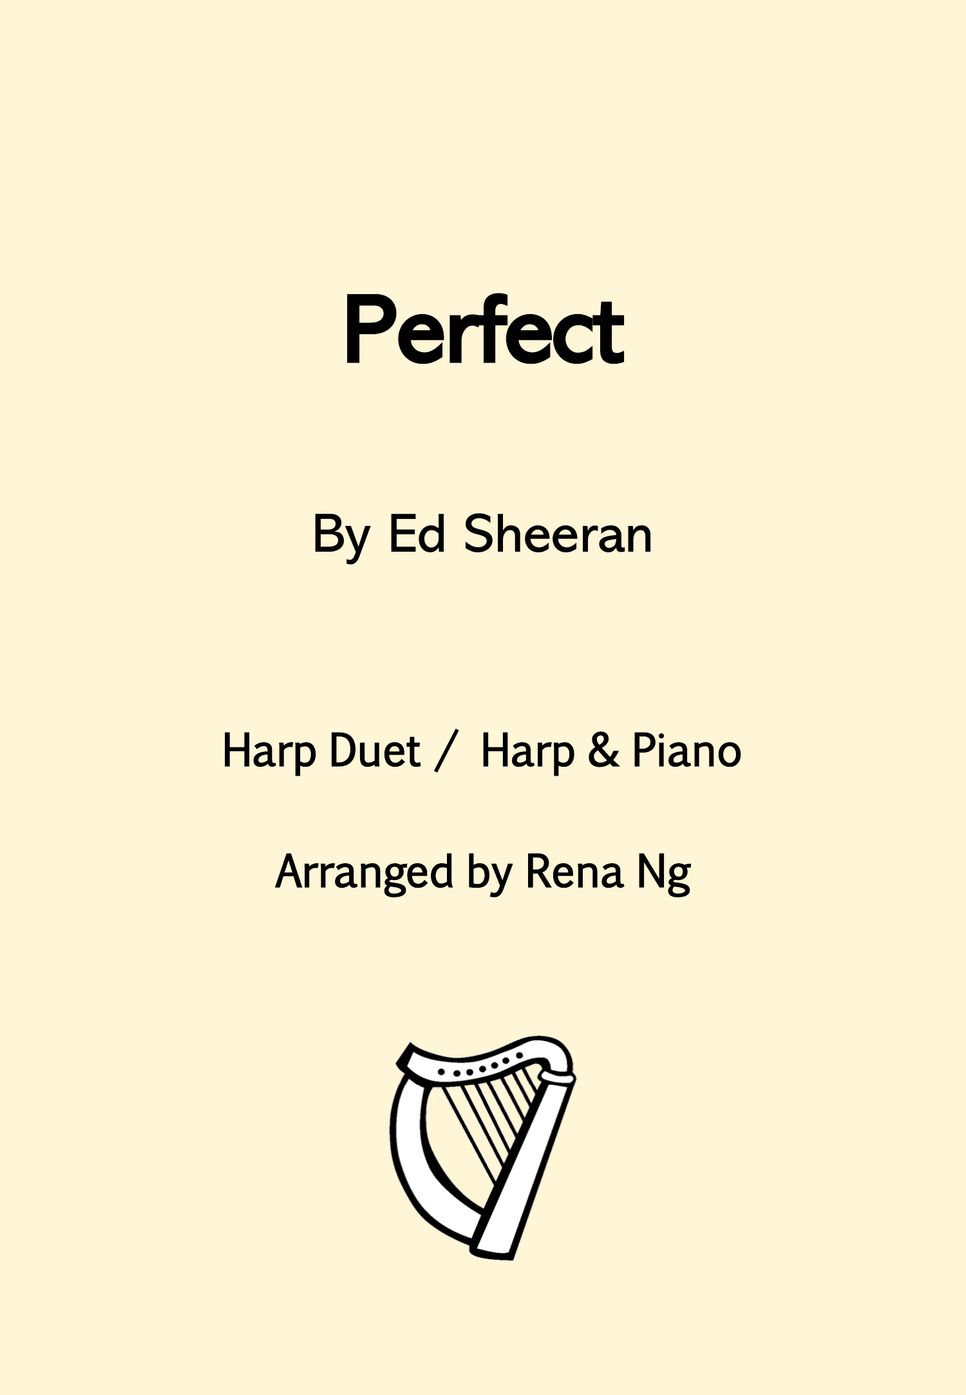 Ed Sheeran - Perfect (Harp Duet / Harp & Piano) - Intermediate by Harp With Me